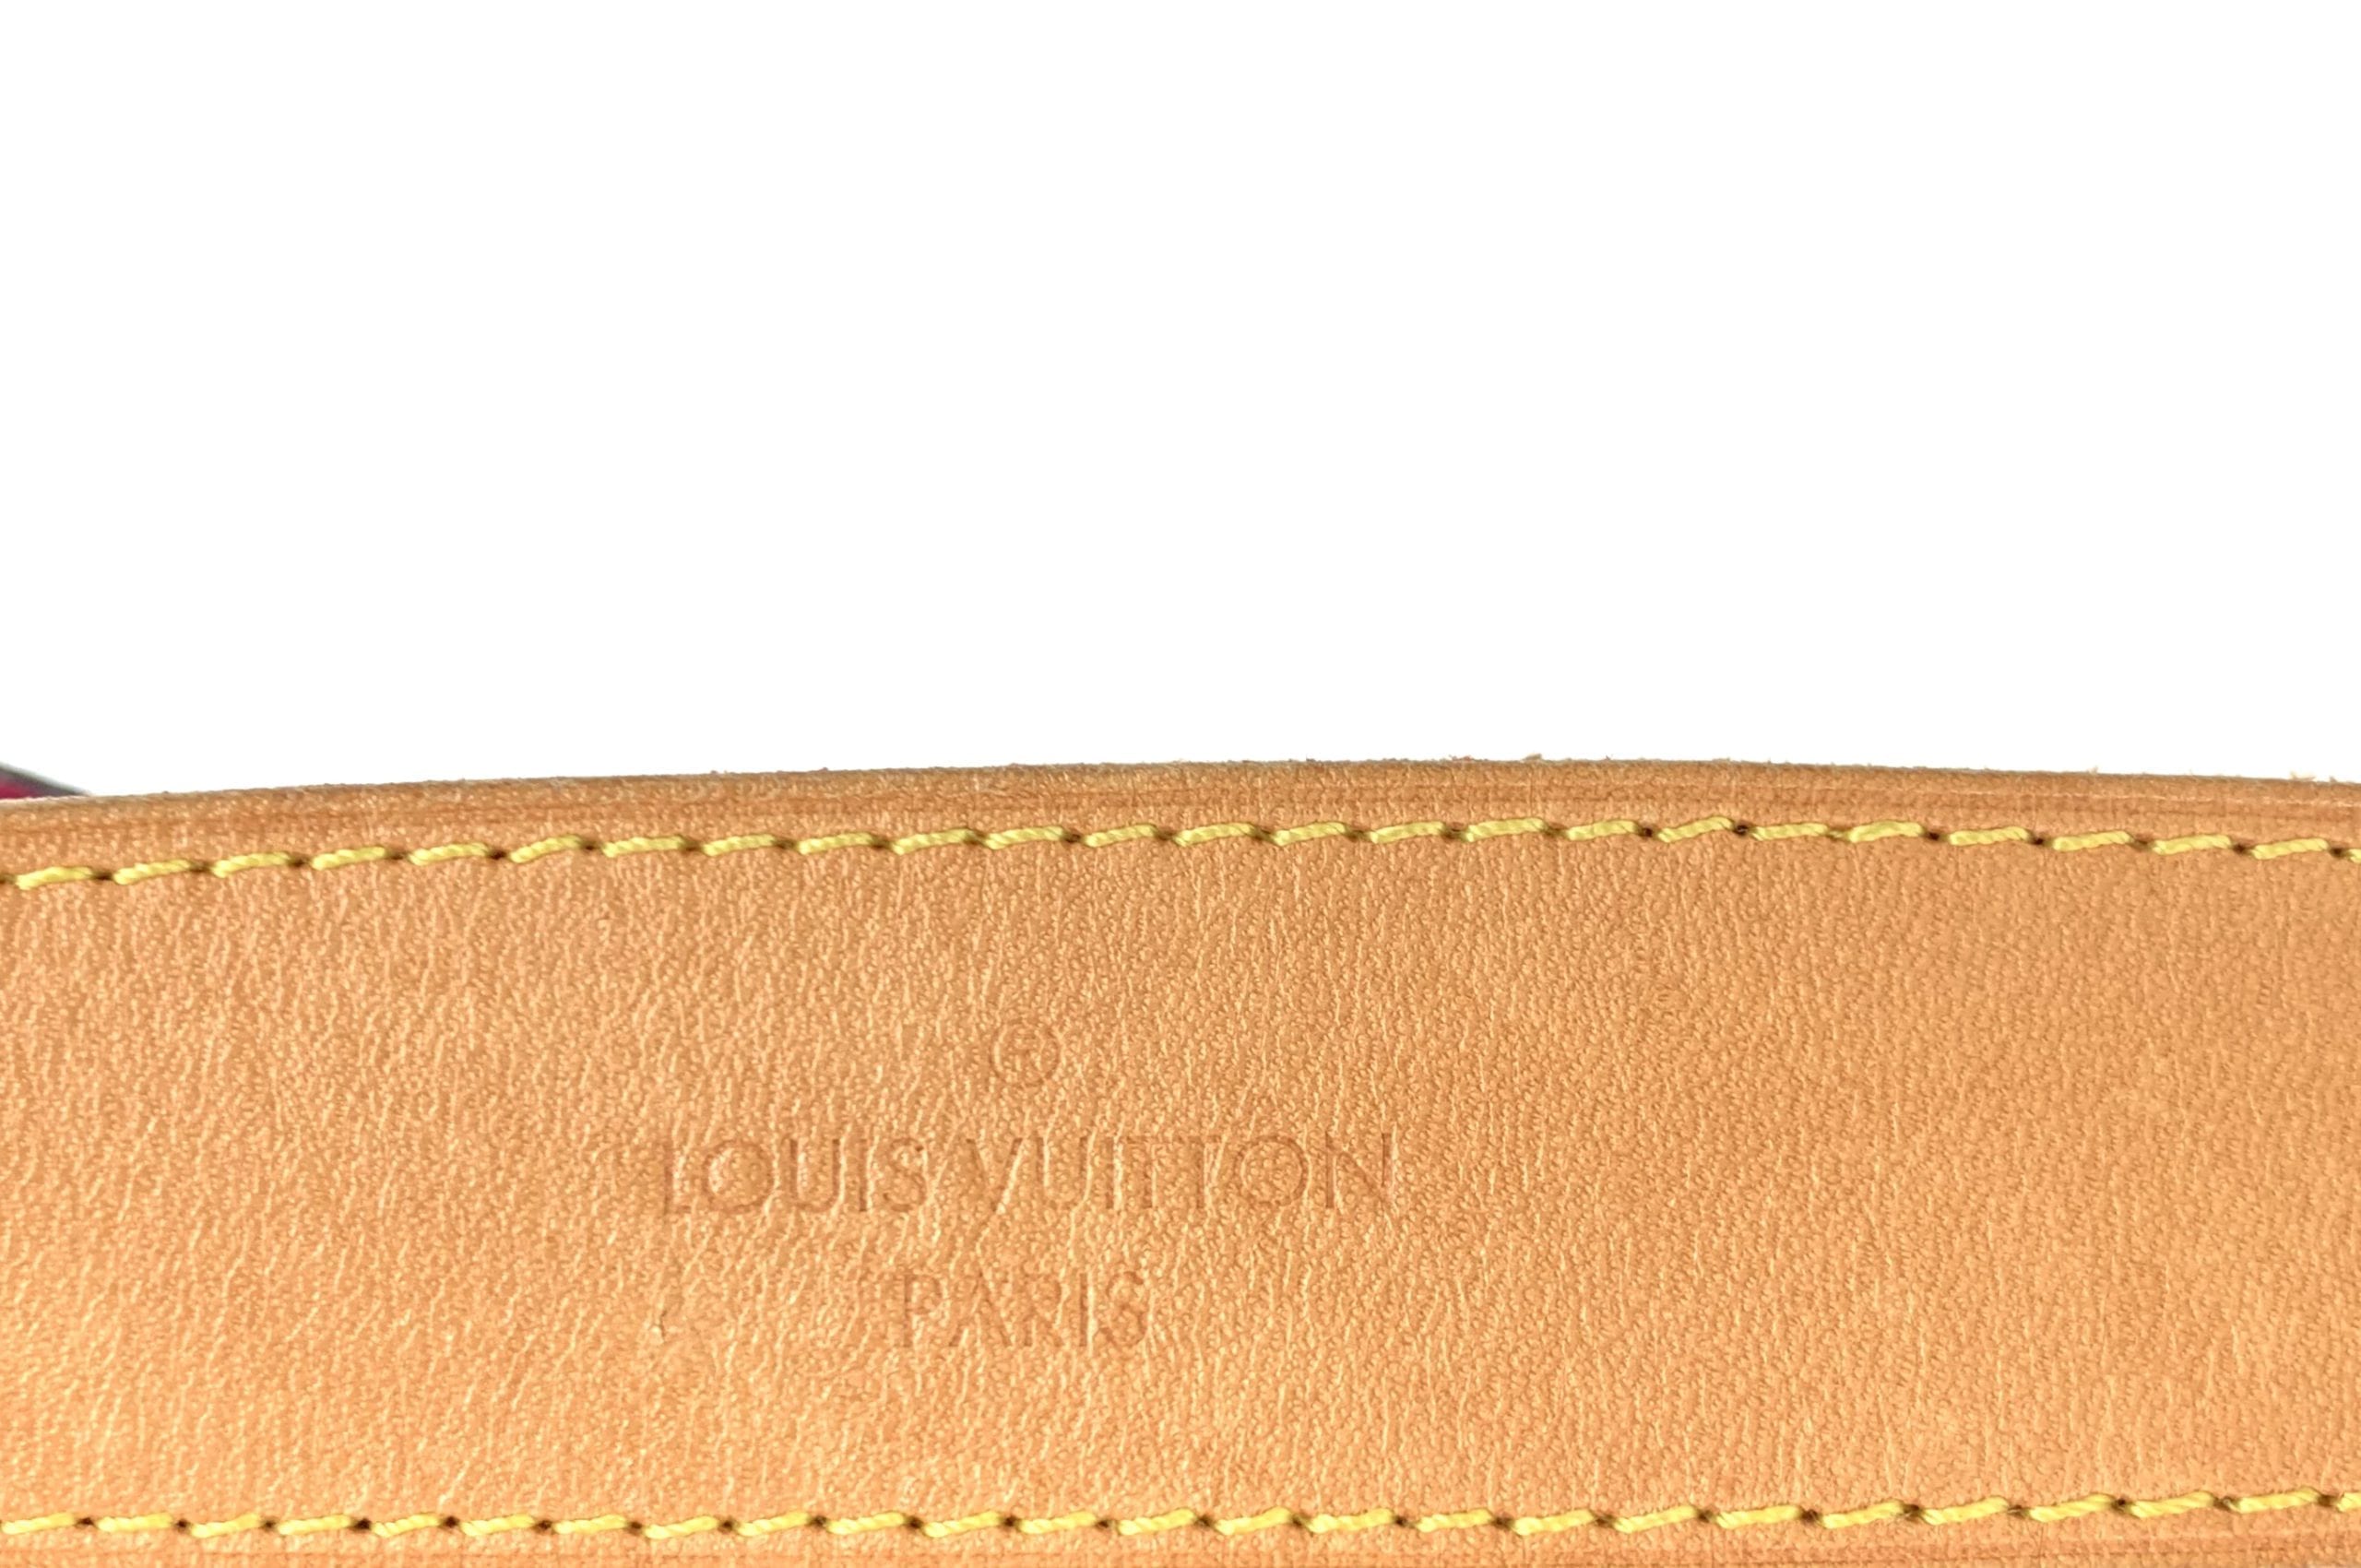 Louis Vuitton Graceful MM Monogram - A World Of Goods For You, LLC